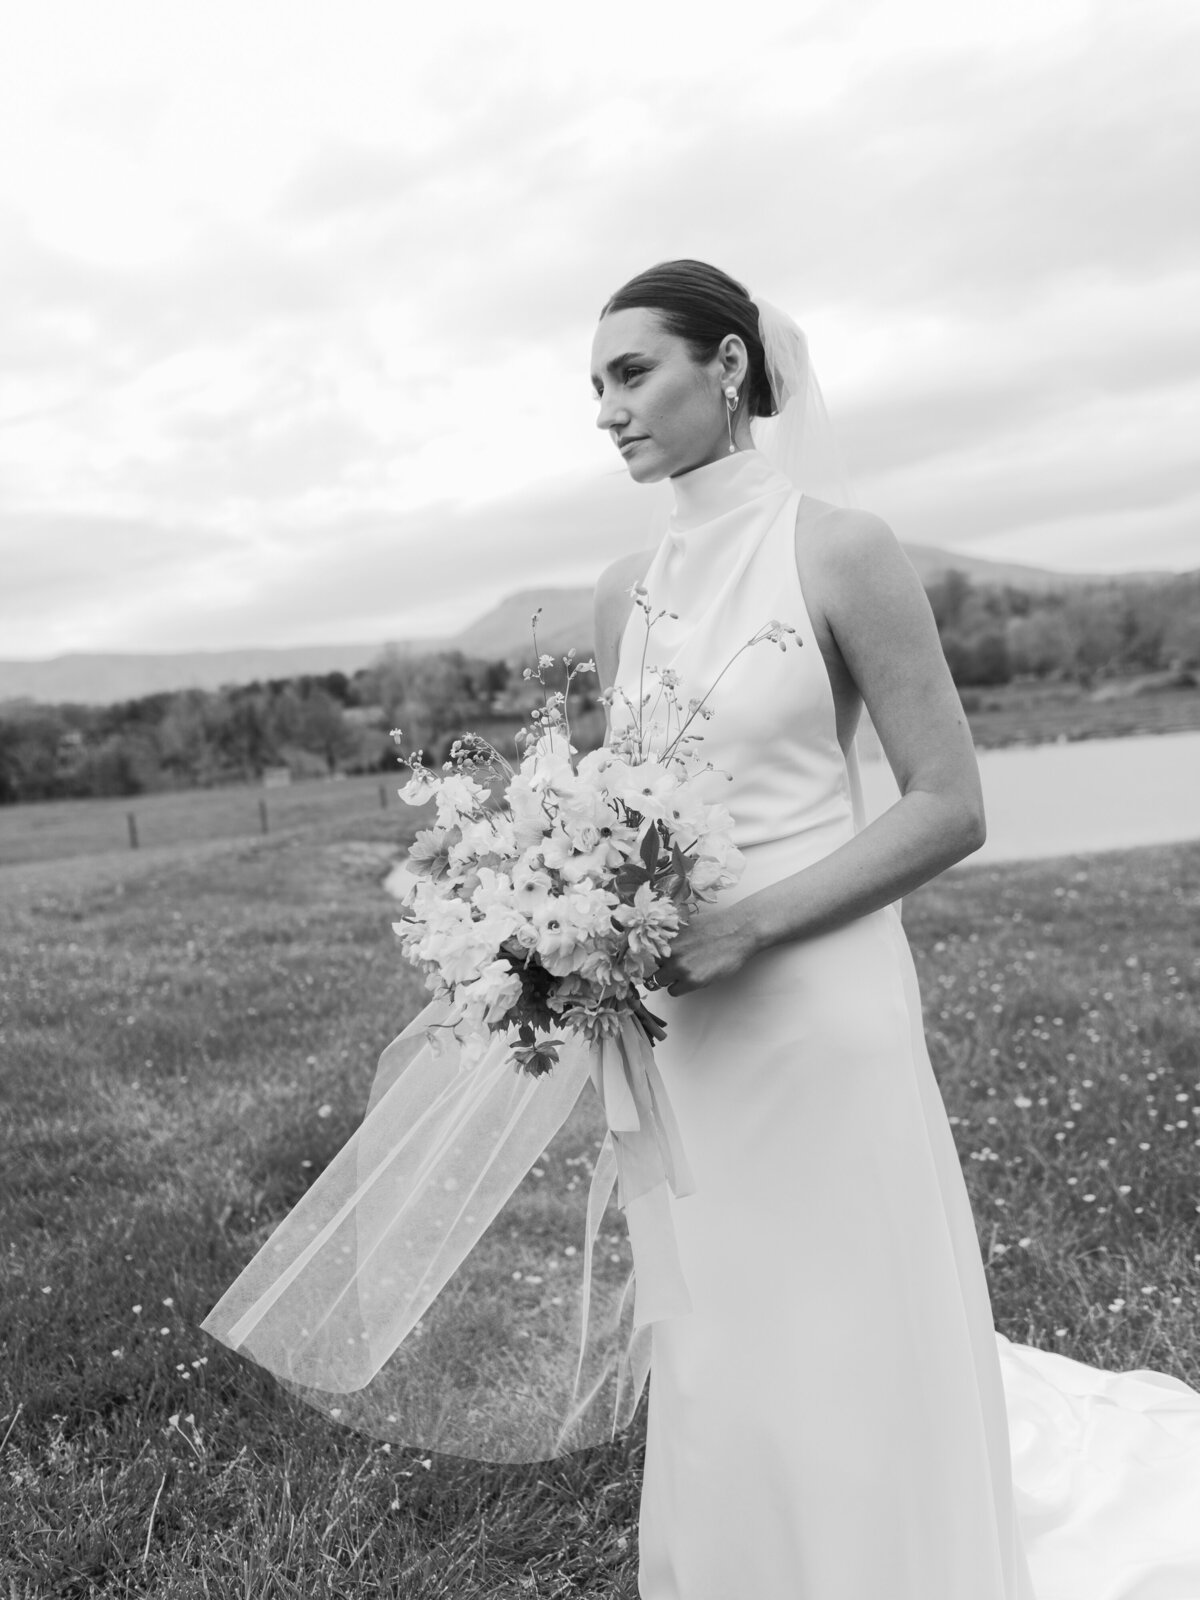 Big Spring Farm Wedding Photographer Kristen Weaver Photography VA Wedding Worldwide Wedding Editorial Fashion Chic Clean Film-1262